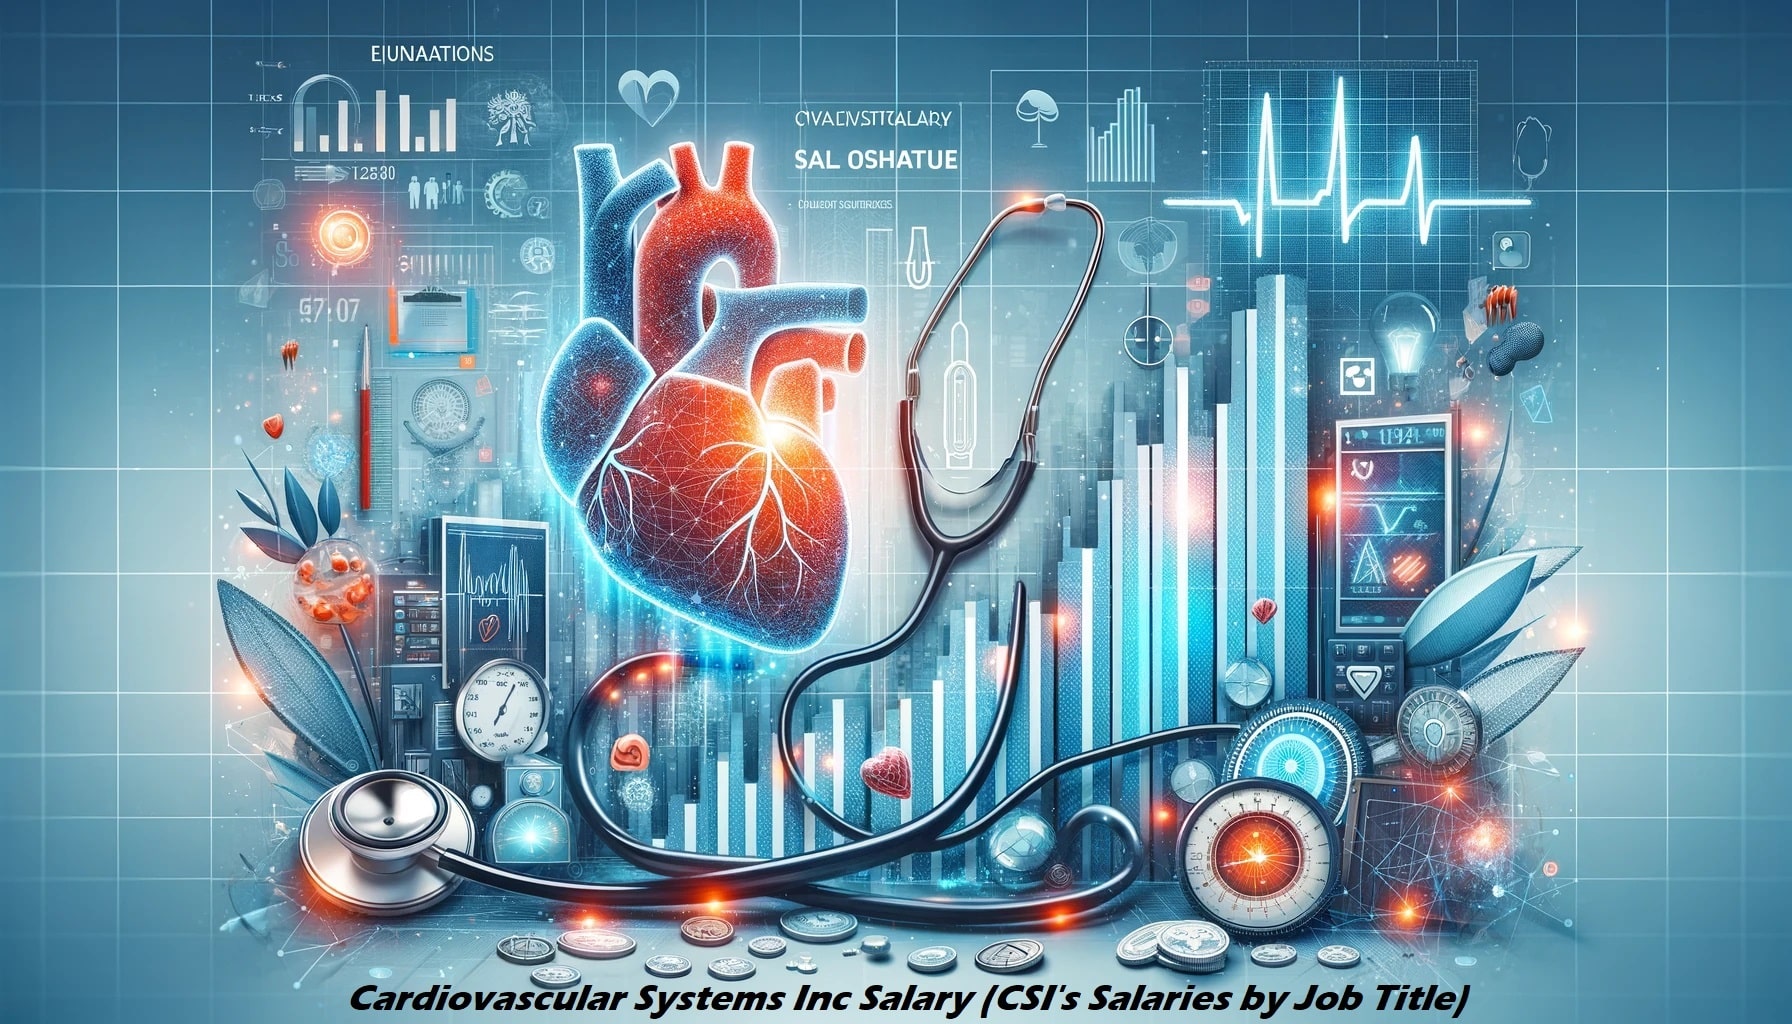 Cardiovascular Systems Inc Salary | CSI's Salaries by Job Title